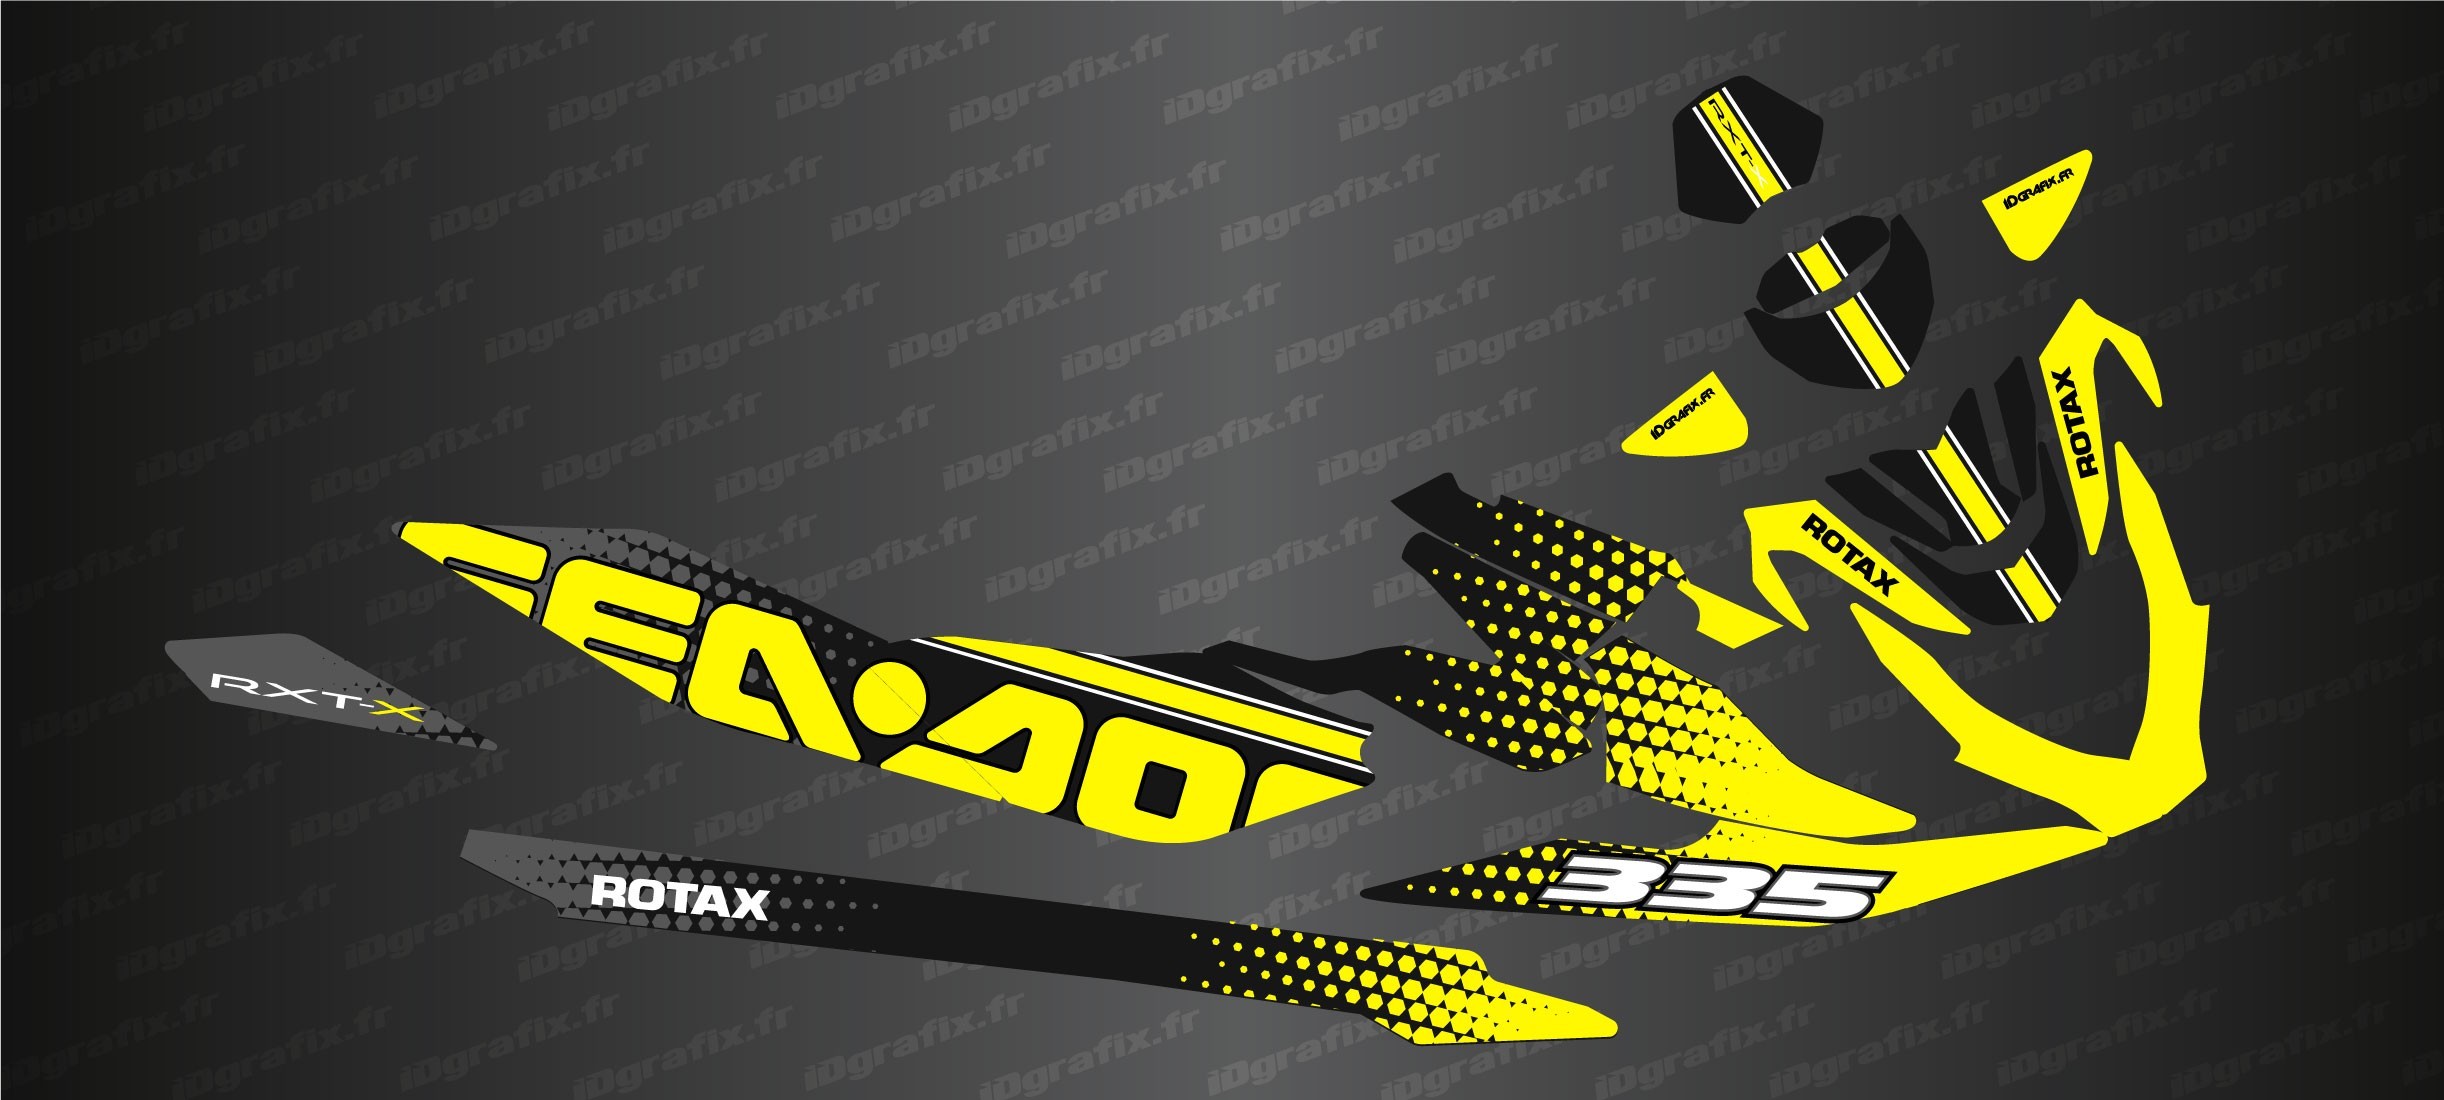 SEADOO RXT RXTX 300 2018 stickers kit decals graphics for Yellow jet ski vinyl 